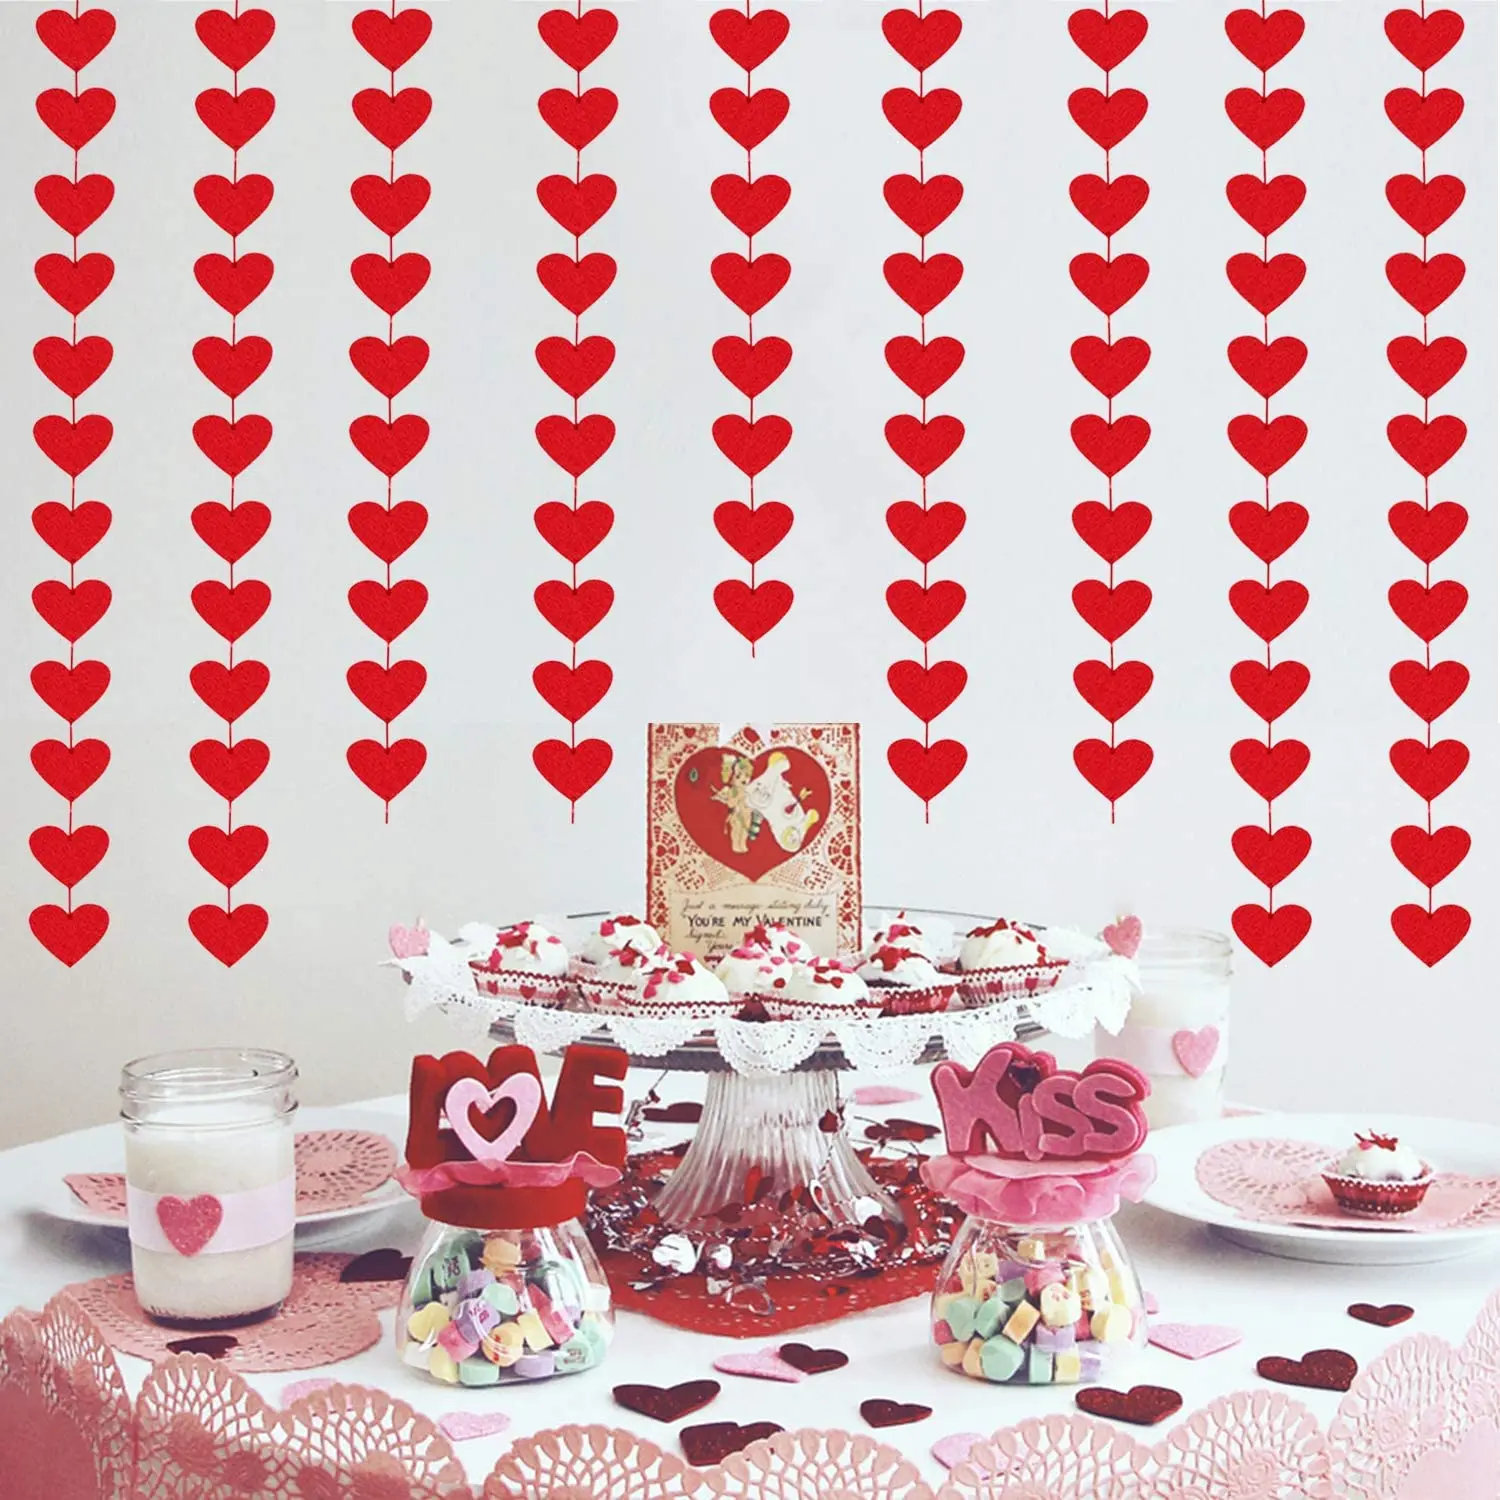 

16pcs Red Hearts Felt Garland Valentines Day Hanging String Garland Decorations Wedding Anniversary Birthday Party Supplies